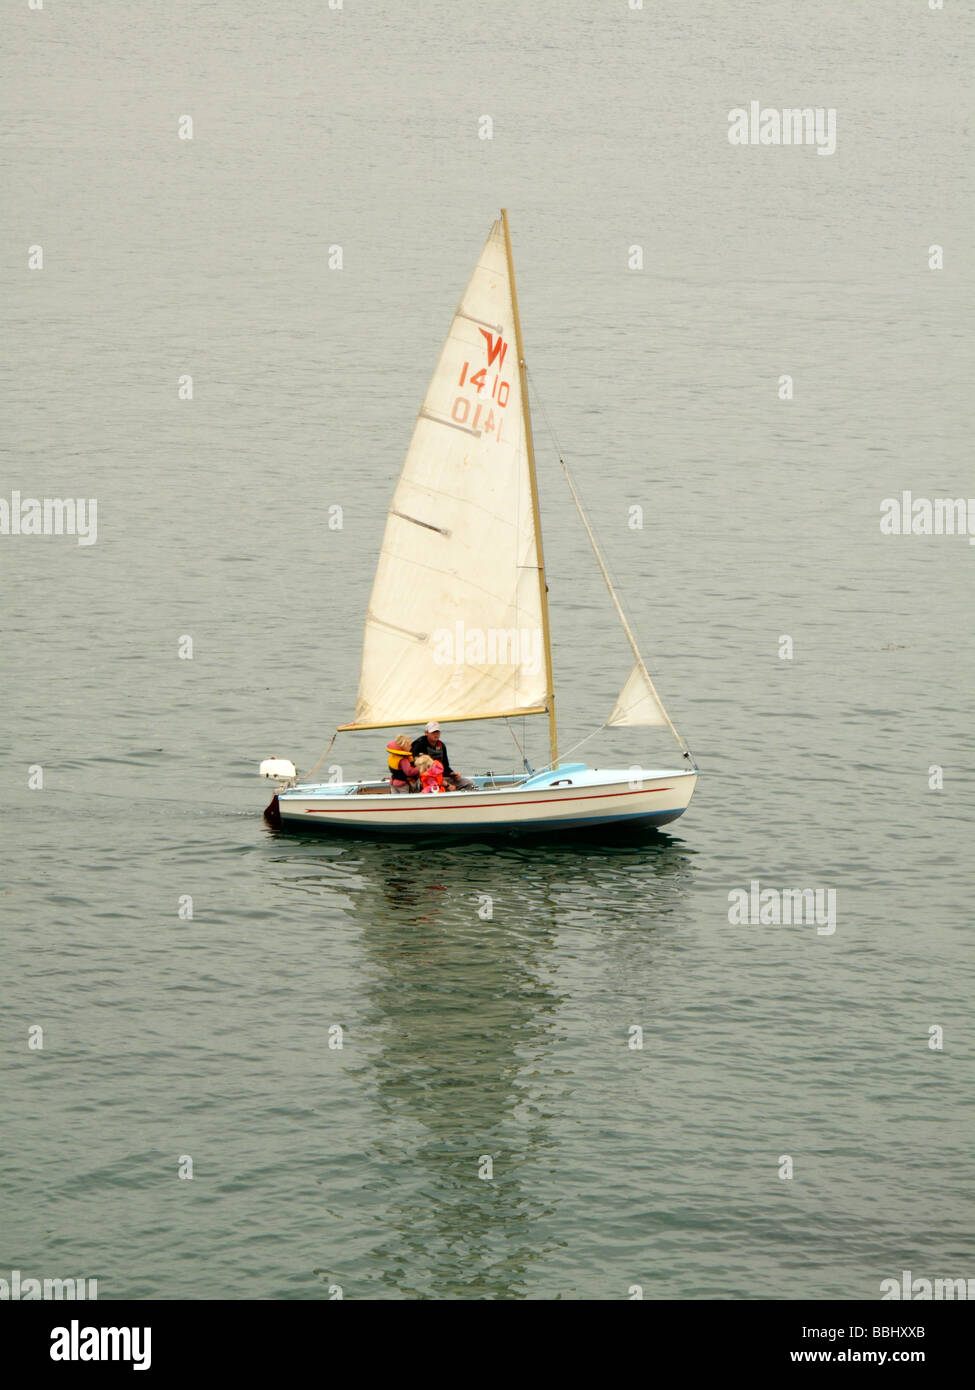 sailing dinghy on a calm sea Stock Photo